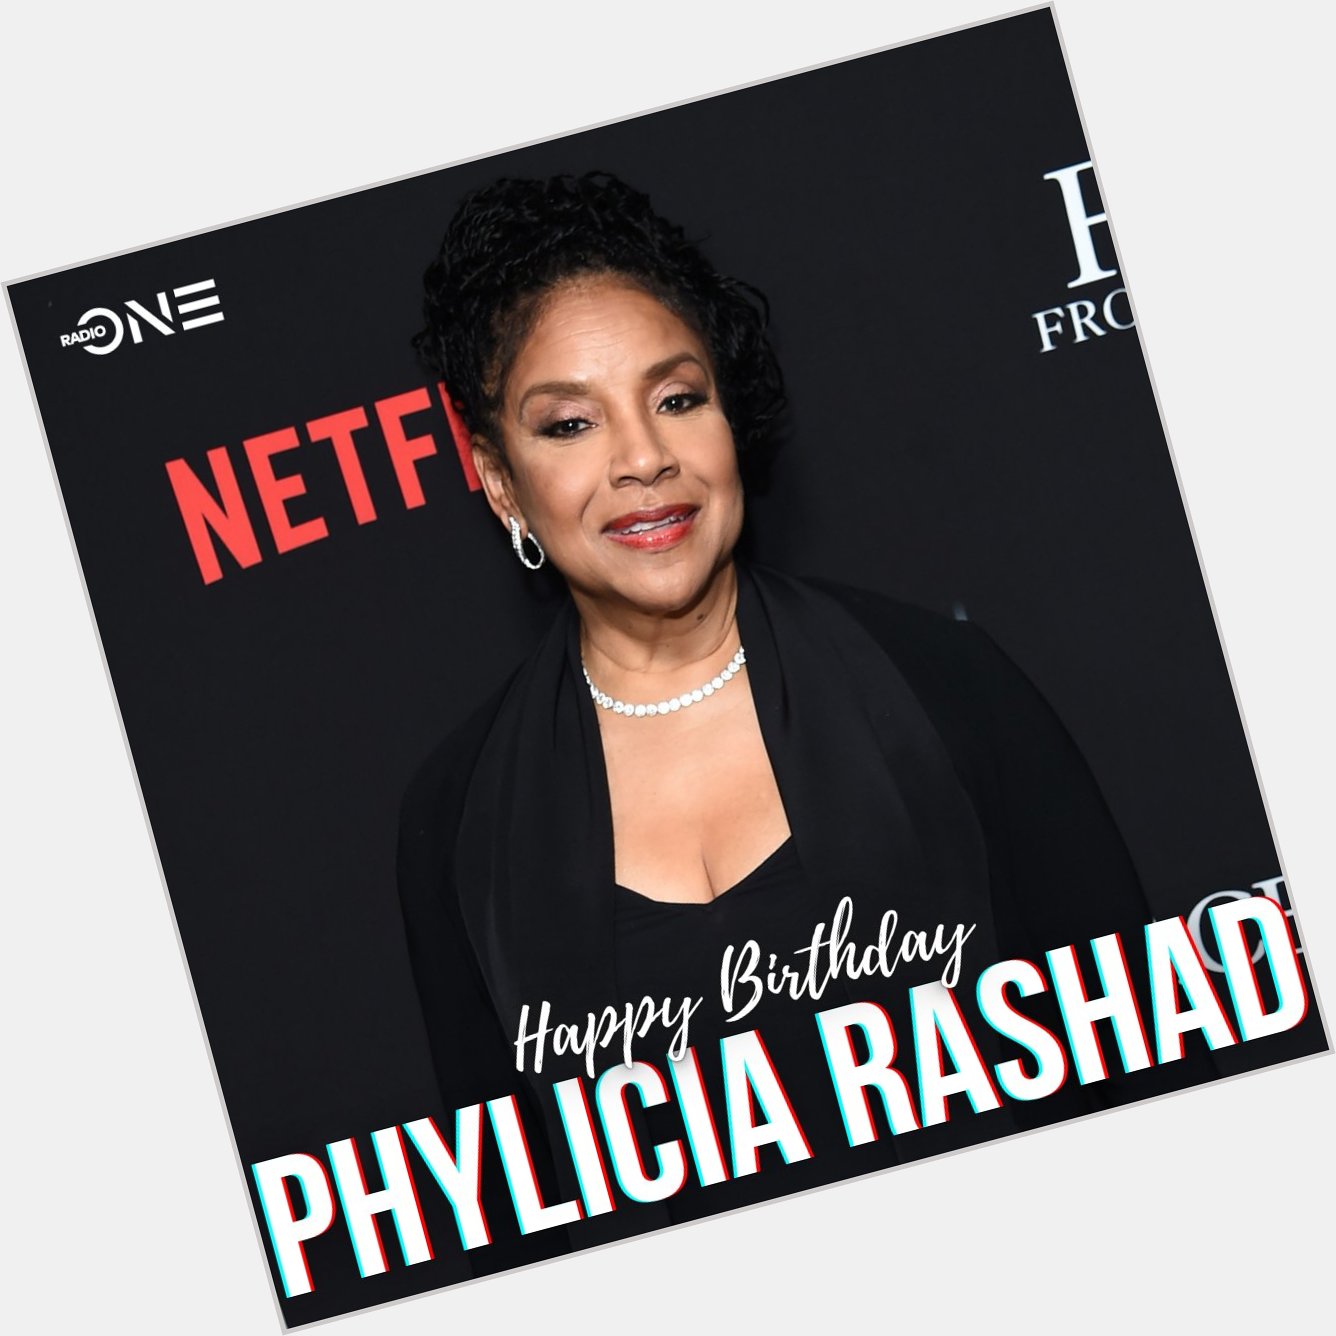 Wishing Phylicia Rashad a very Happy Birthday 